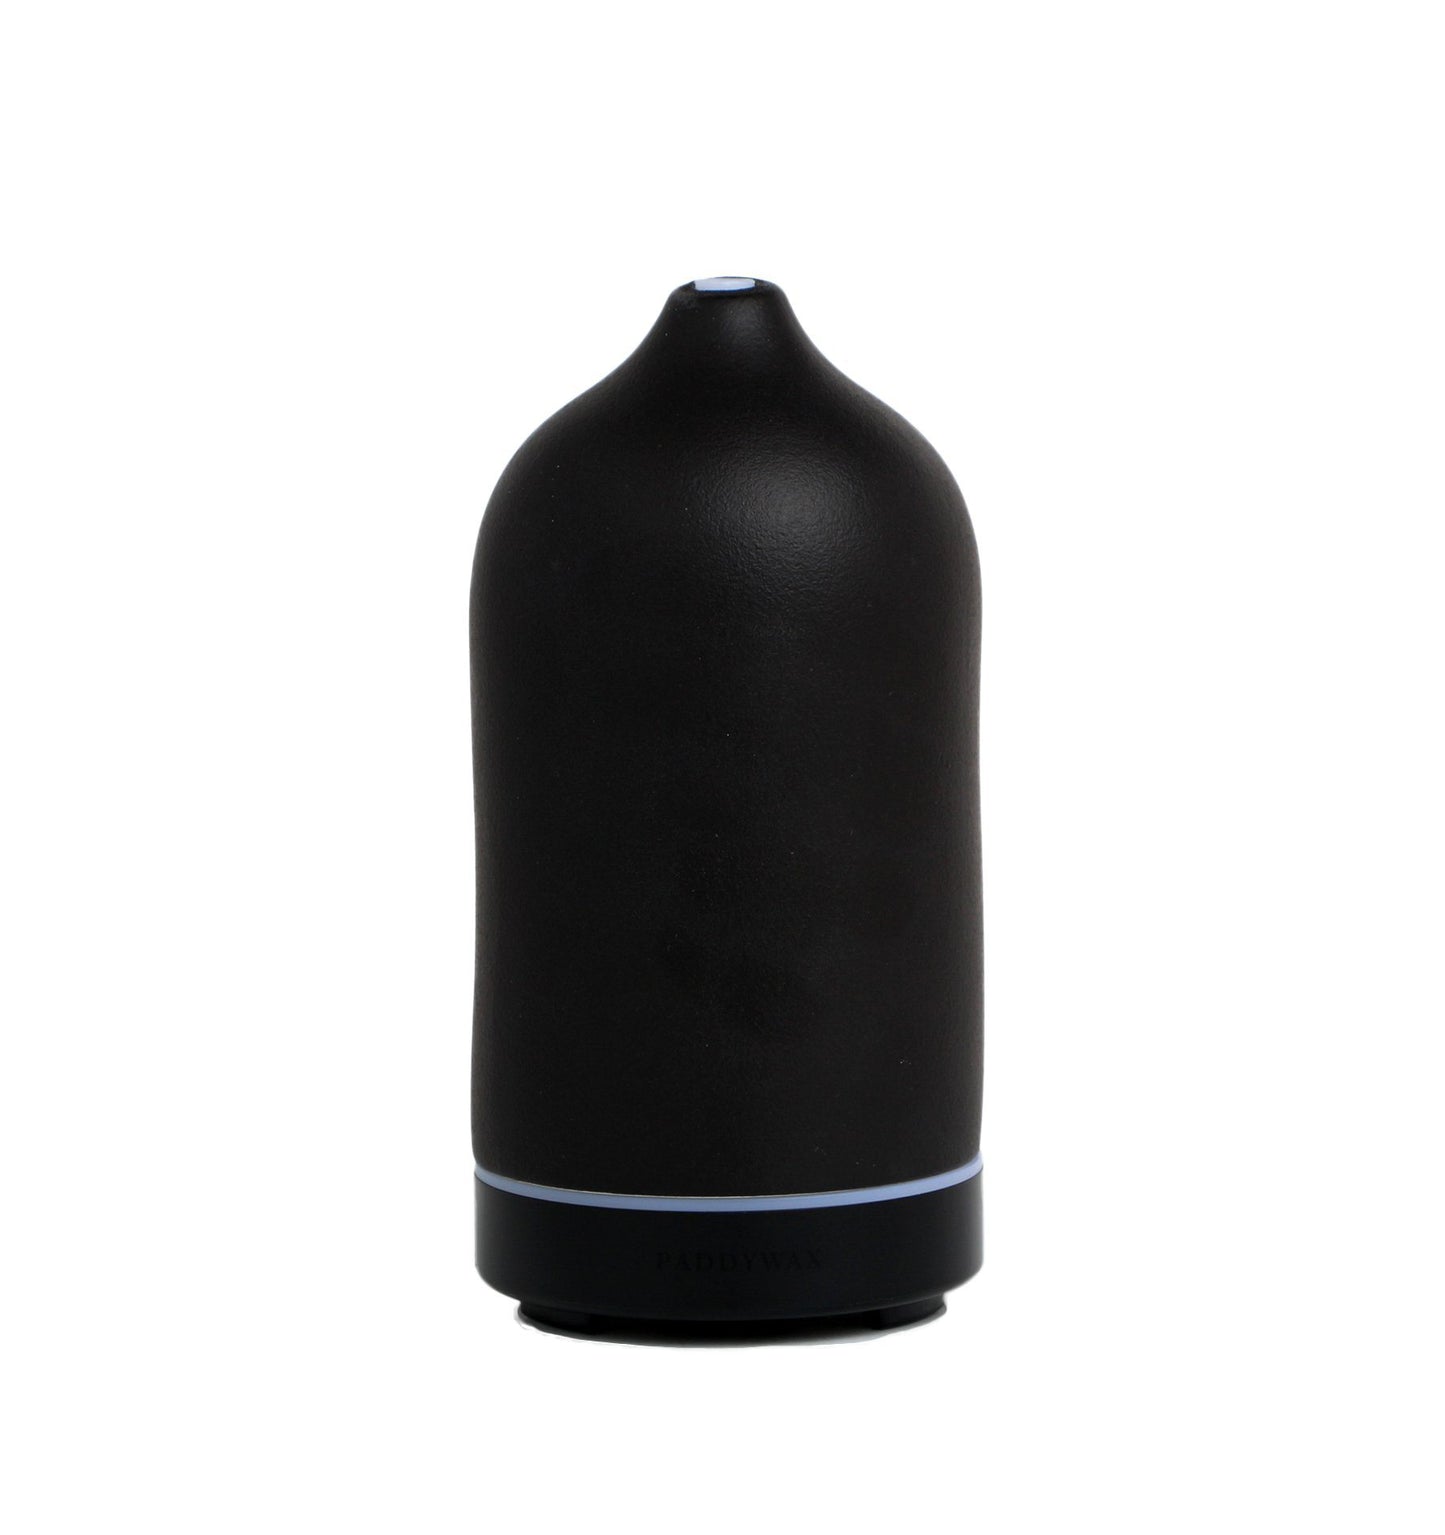 Oil Diffuser - Black 3.5 oz on white background